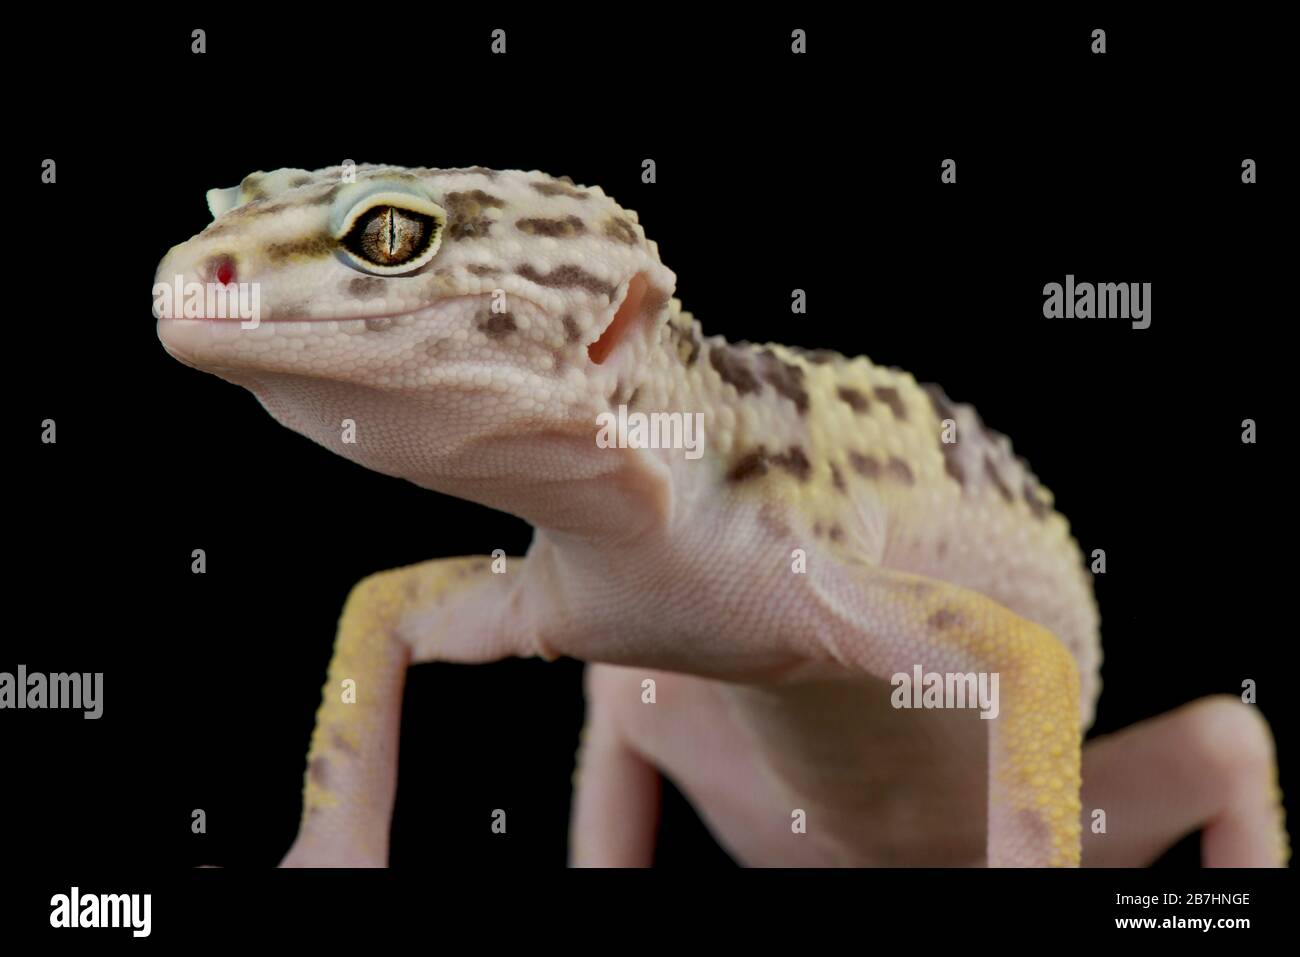 Léopard gecko iranien (Eublepharis angramainyu) Banque D'Images